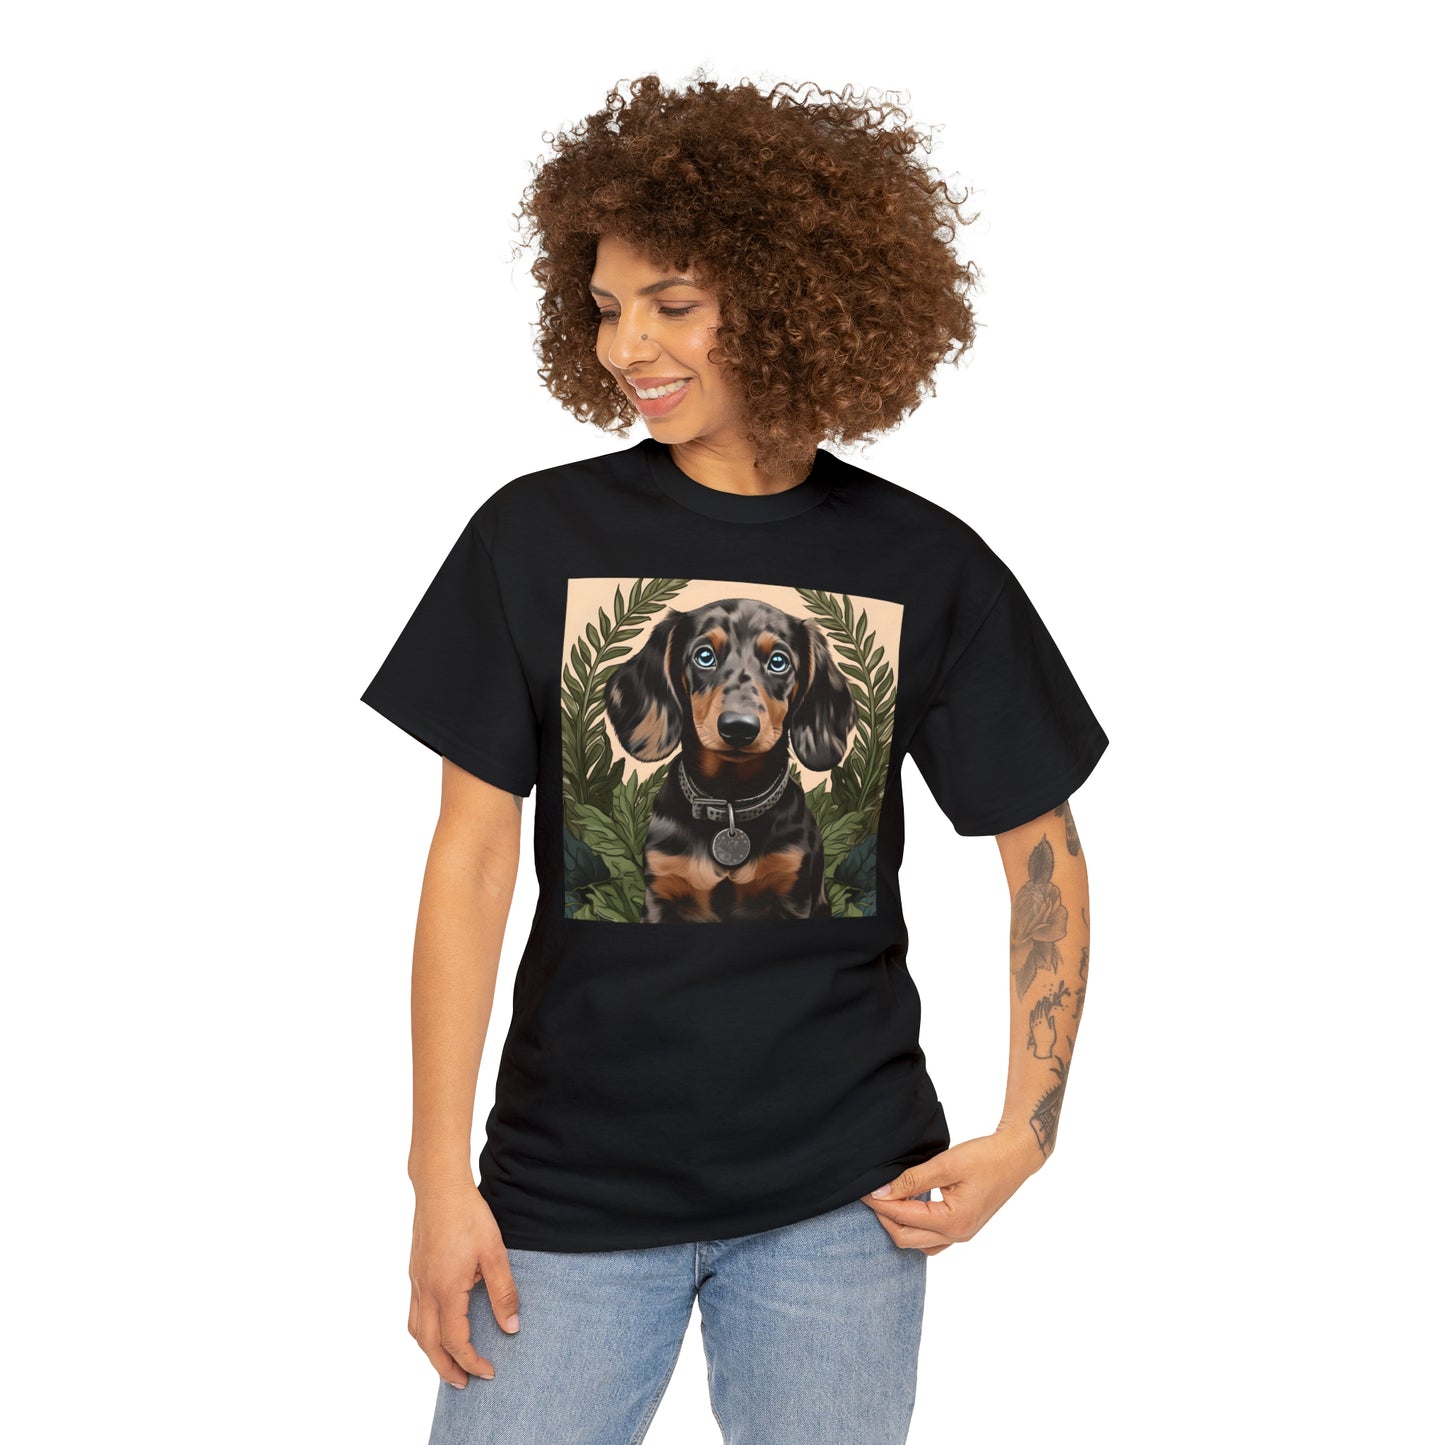 Dachshund Classic Cotton T-Shirt: "Soul Gazer"